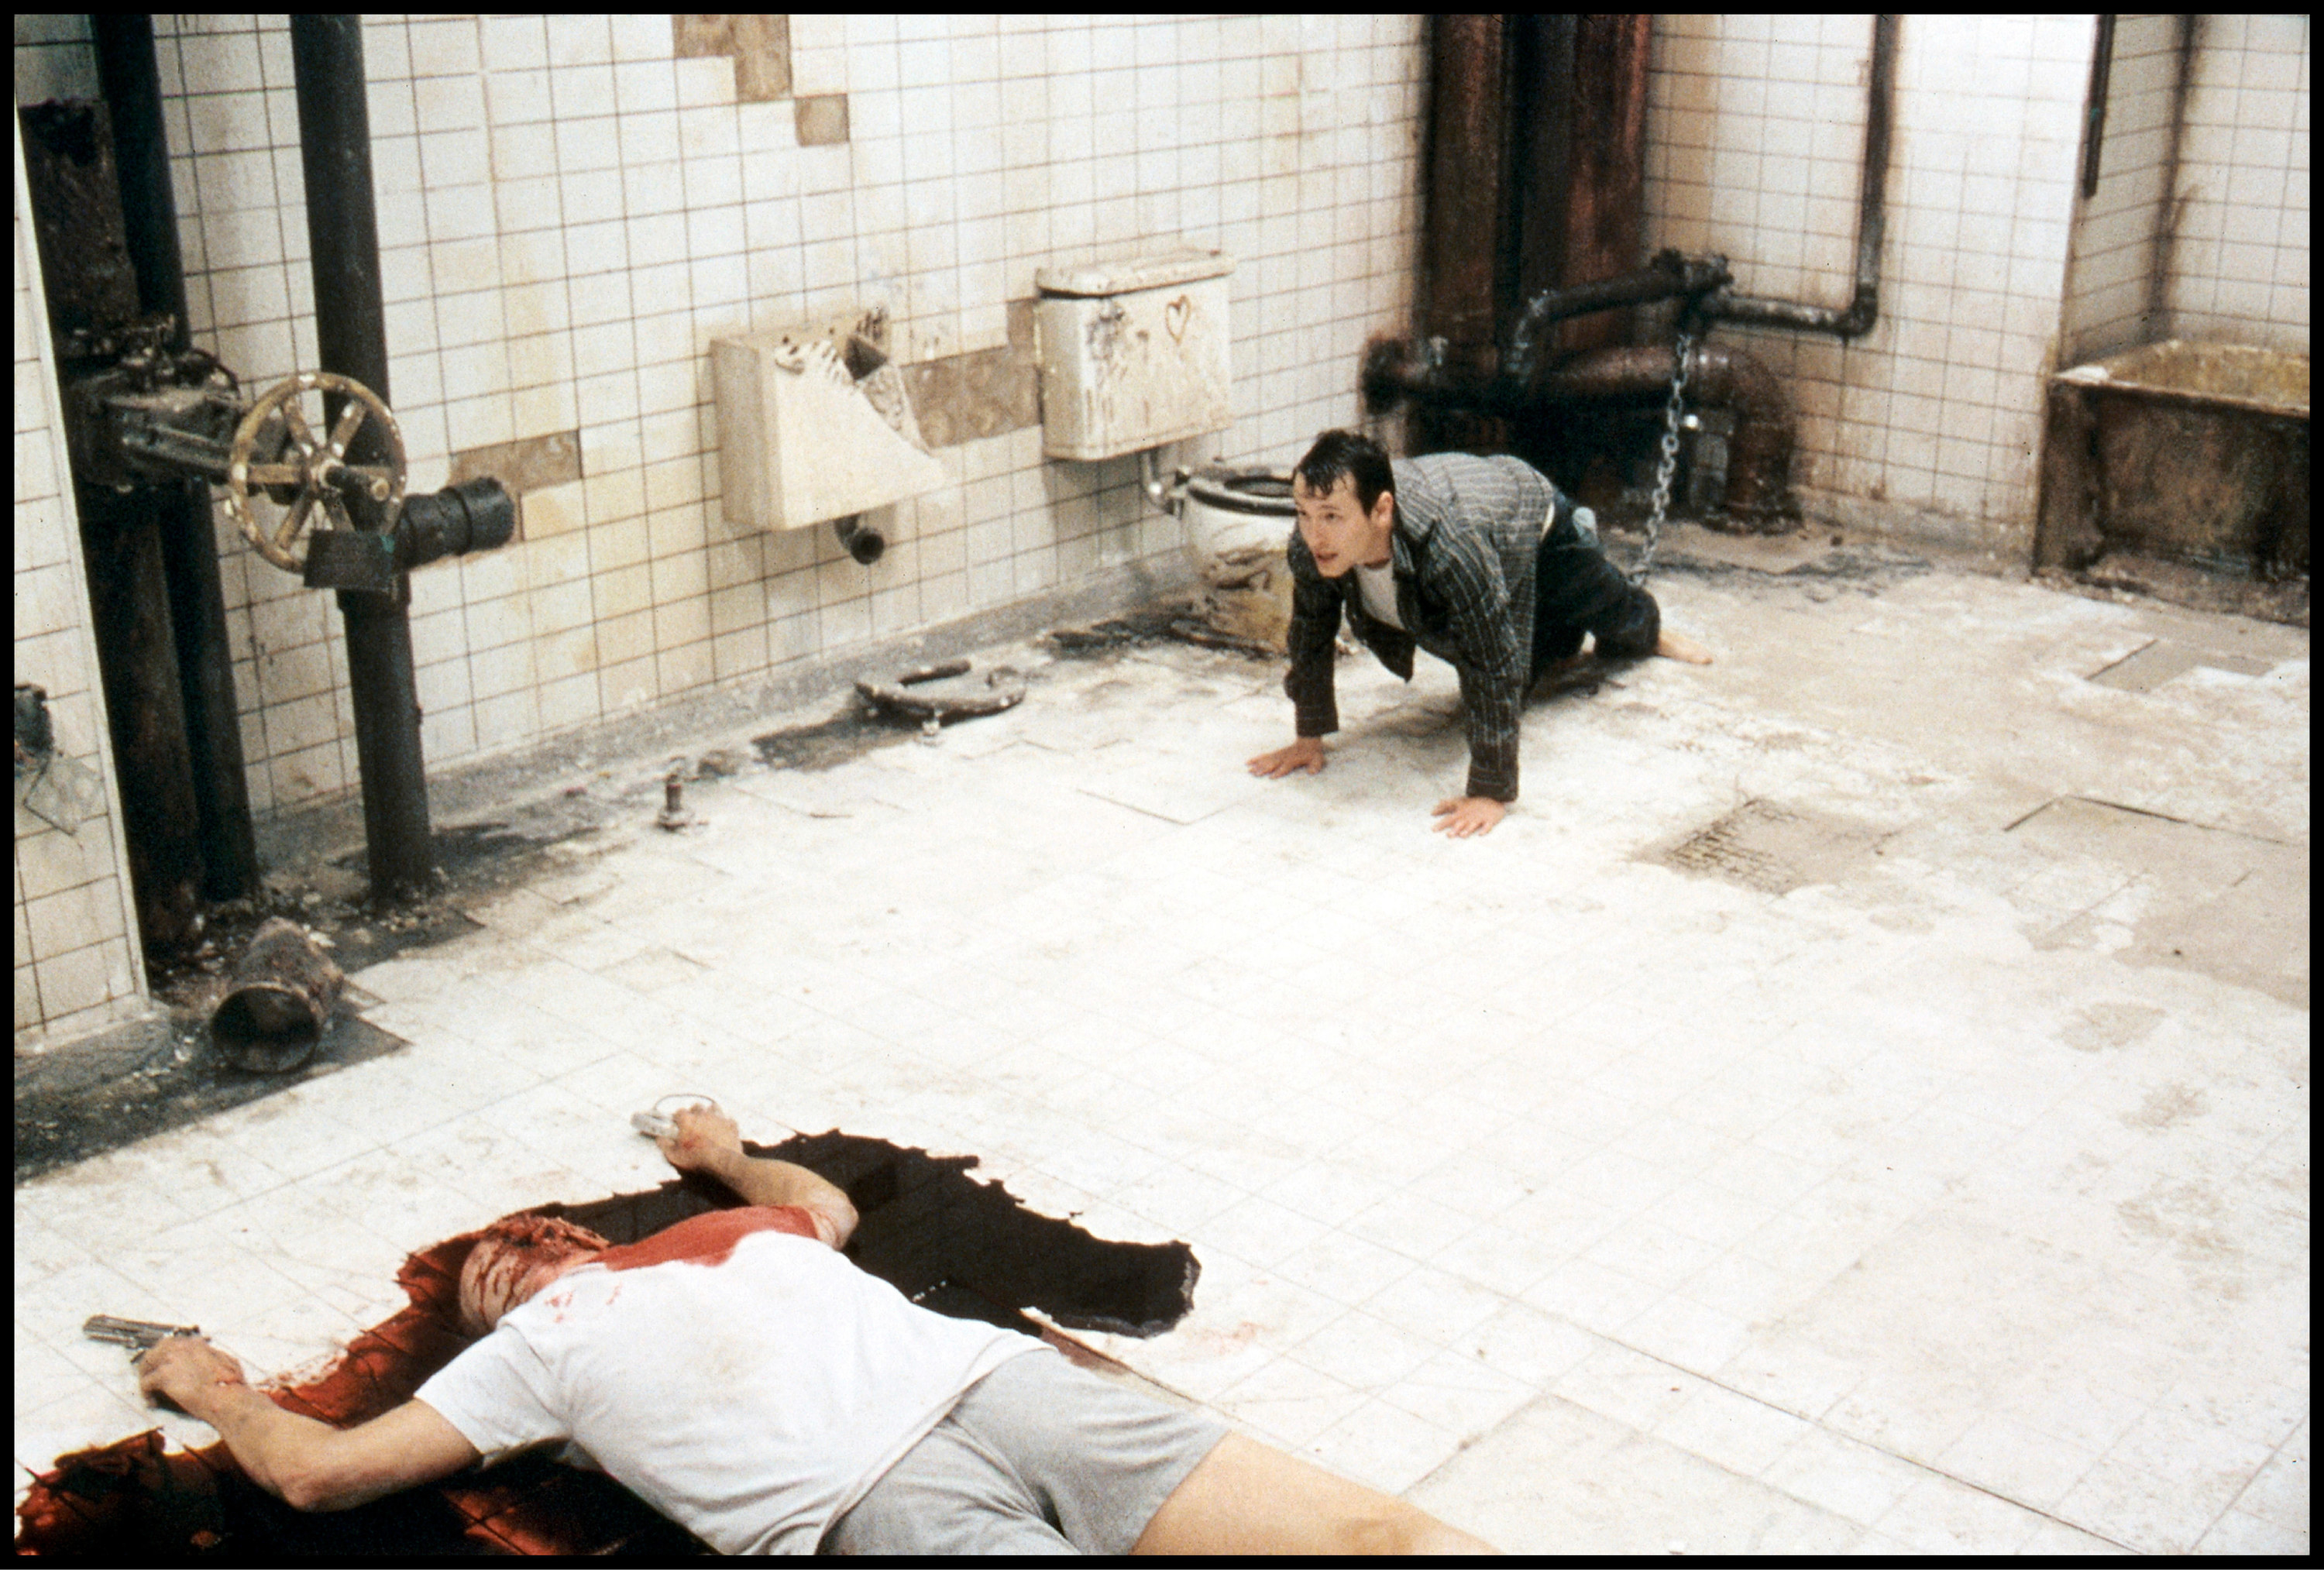 A desperate man crawls on a dirty bathroom floor near a victim of an apparent suicide